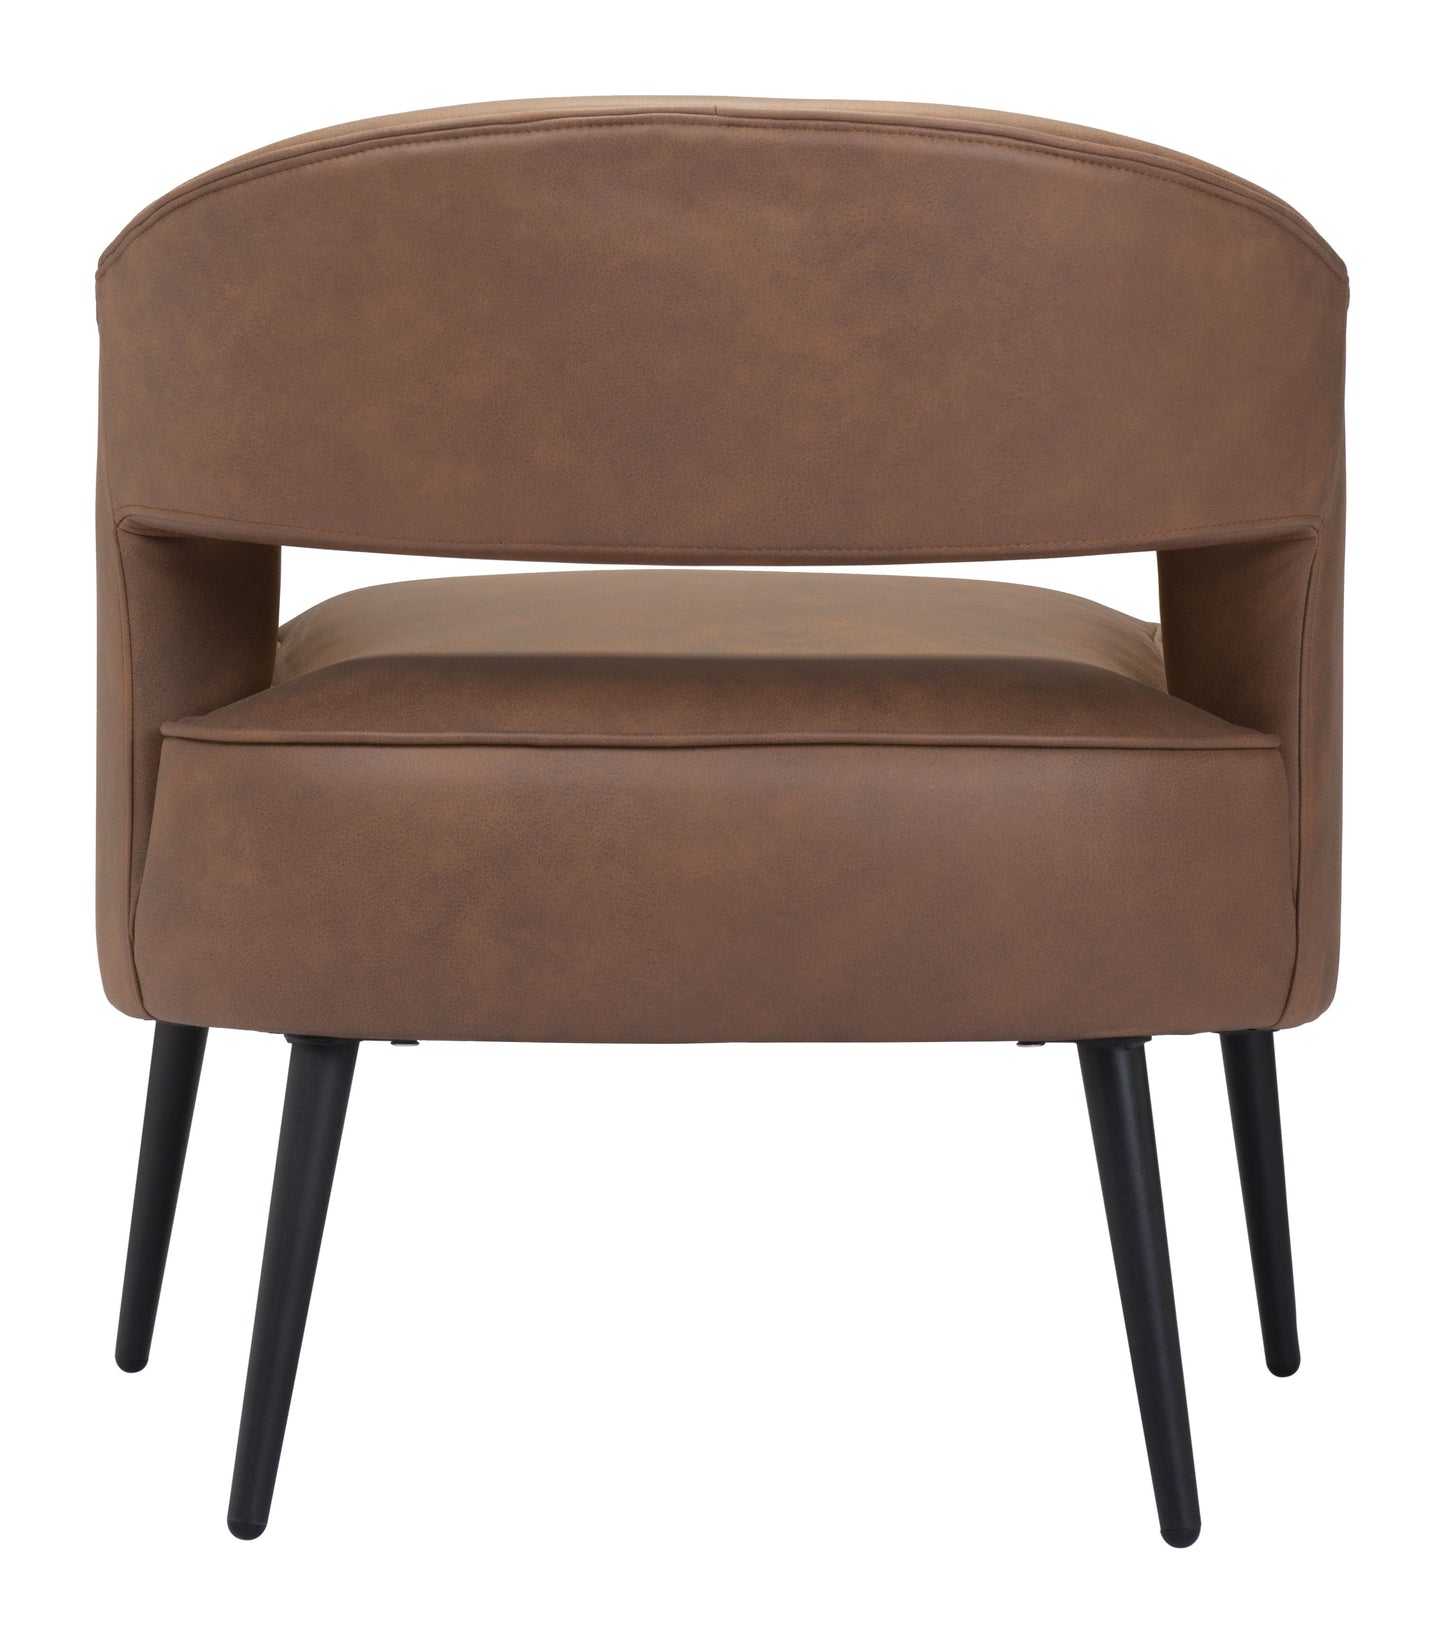 Berkeley Accent Chair Vintage Brown